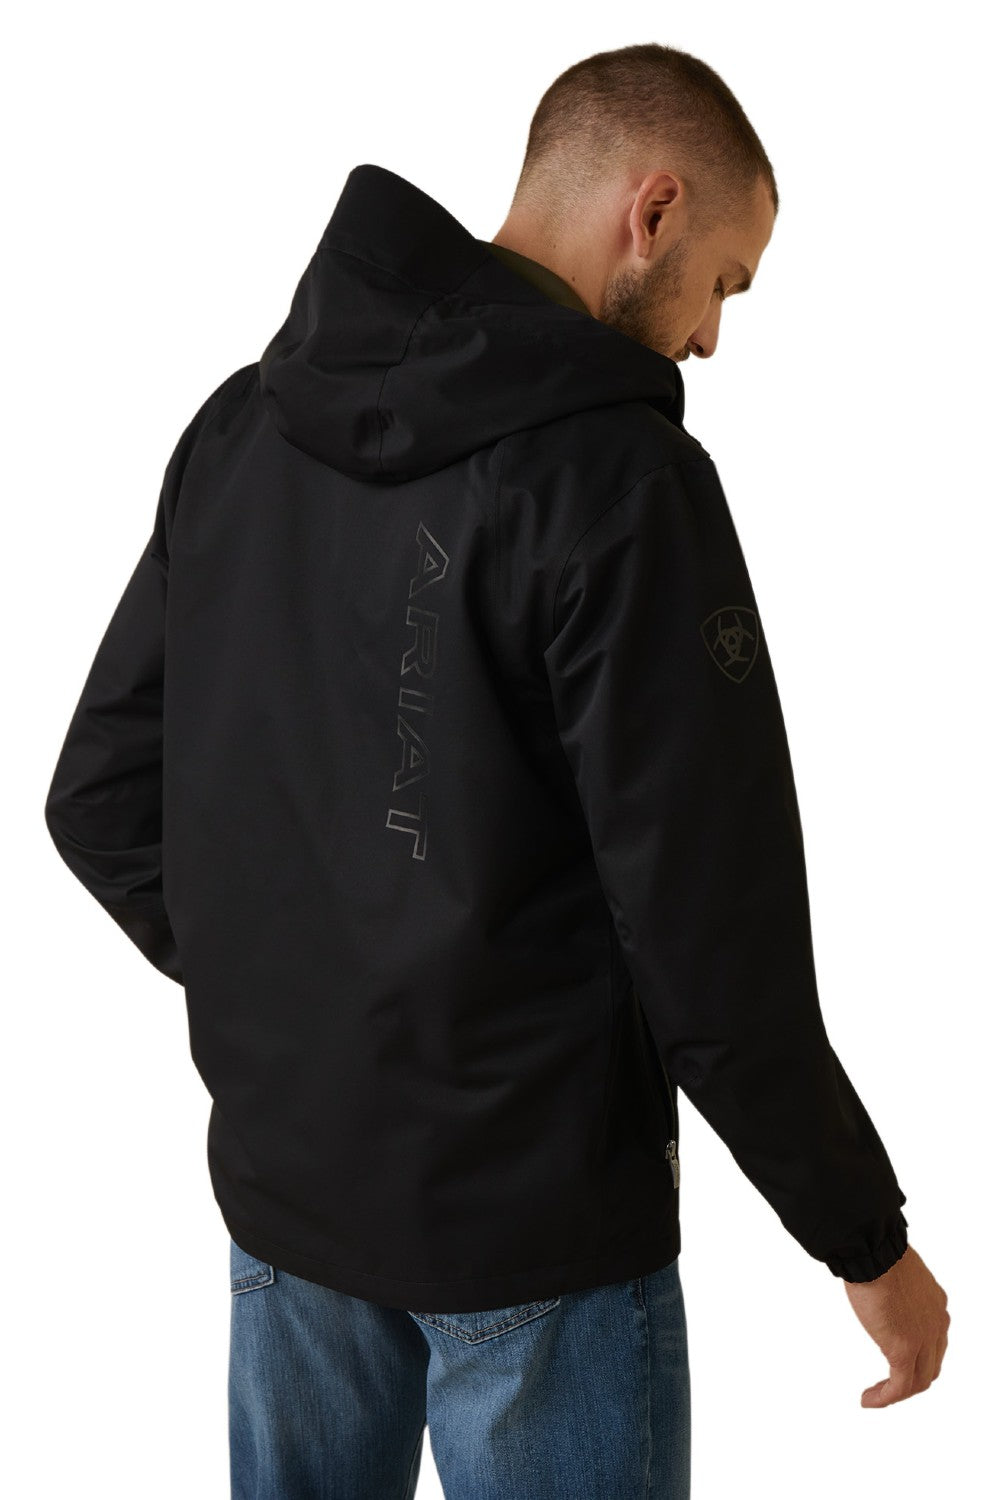 Ariat Spectator Waterproof Jacket In Black 